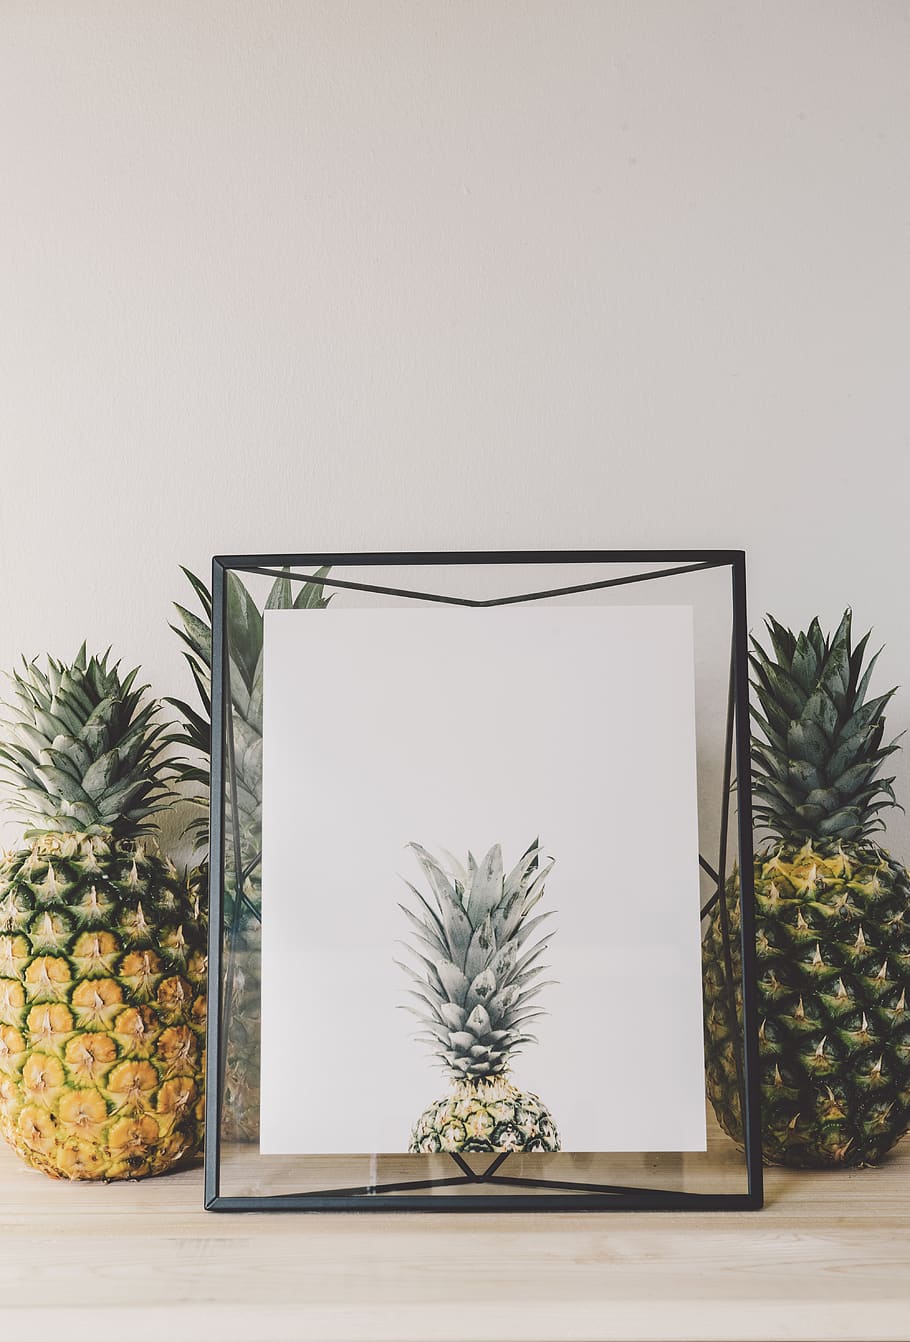 Ripe Pineapples, art, color, delicious, design, empty, frame